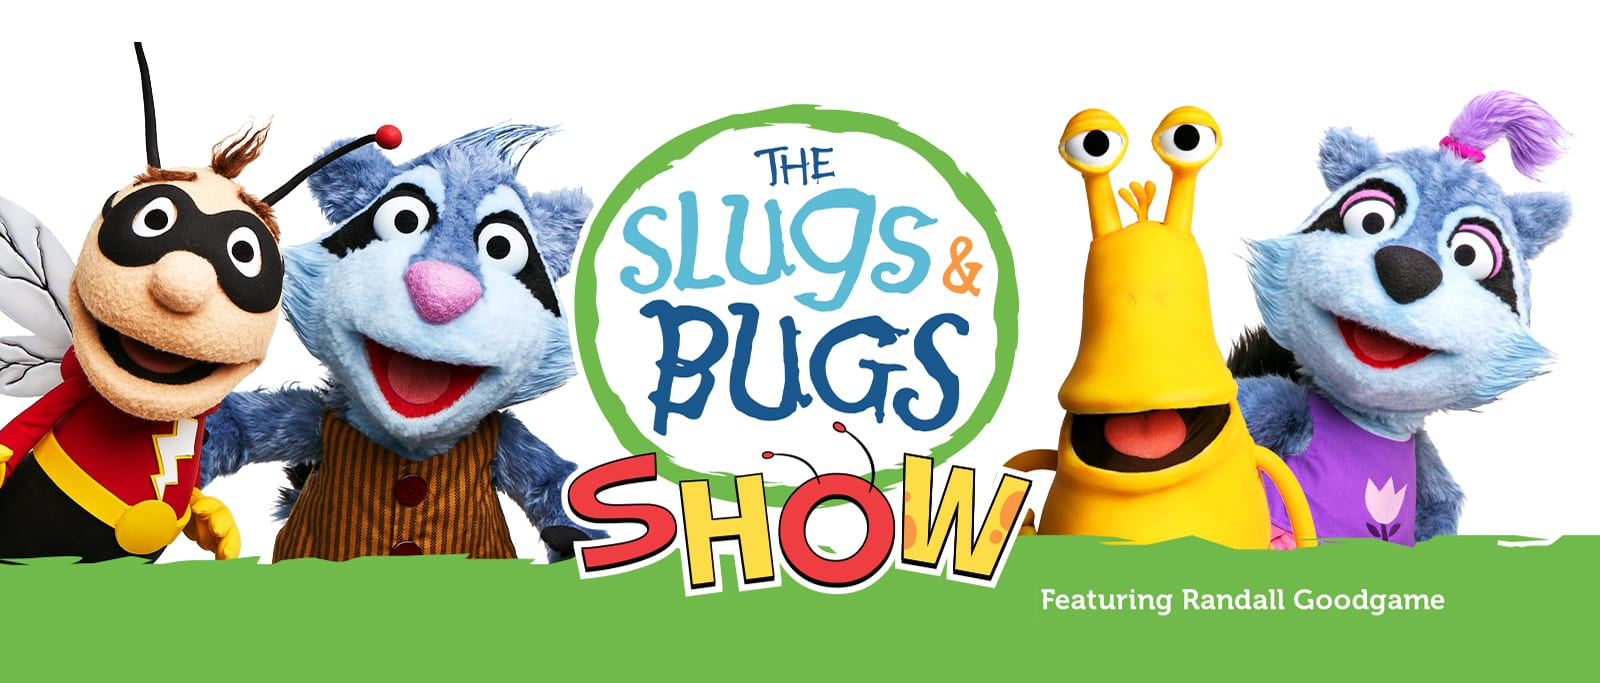 Randall Goodgame's Slugs and Bugs Show